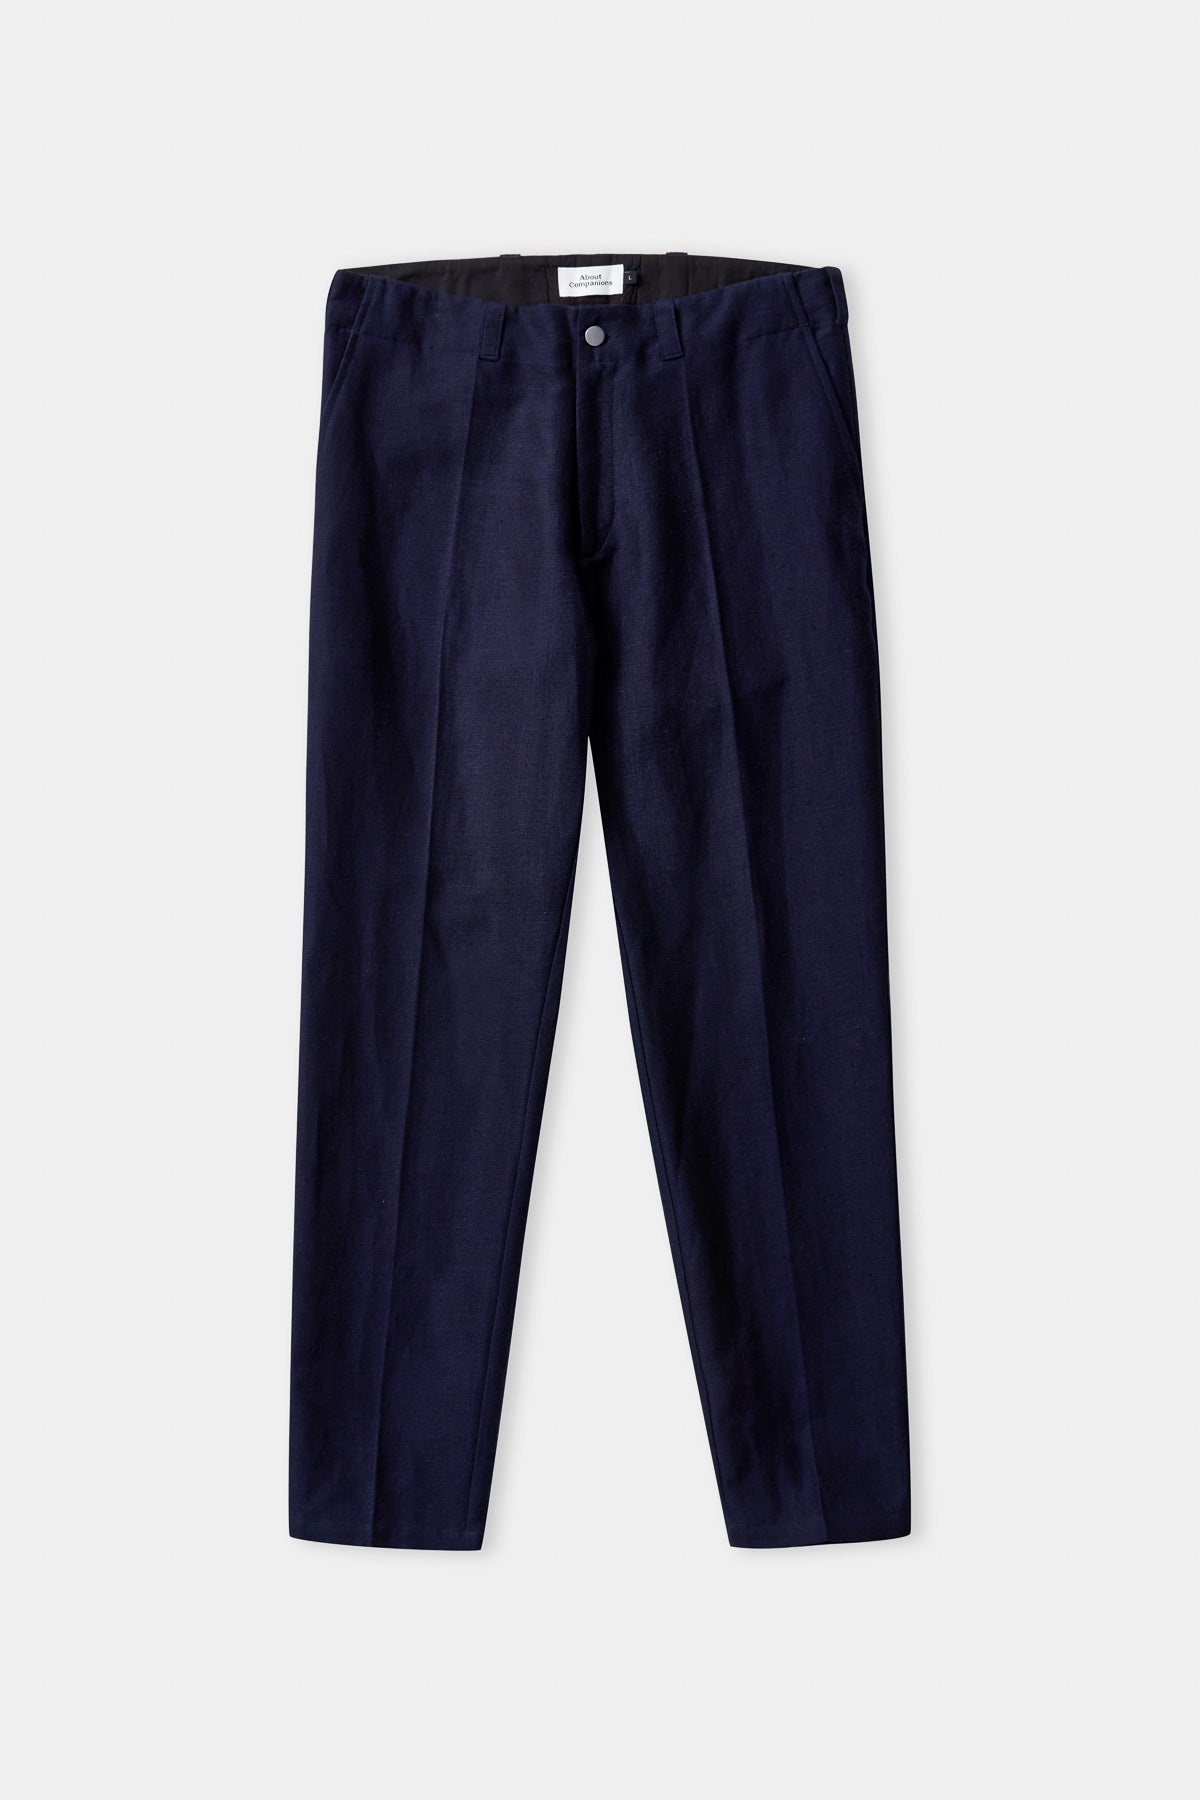 JOSTHA trousers navy winter linen